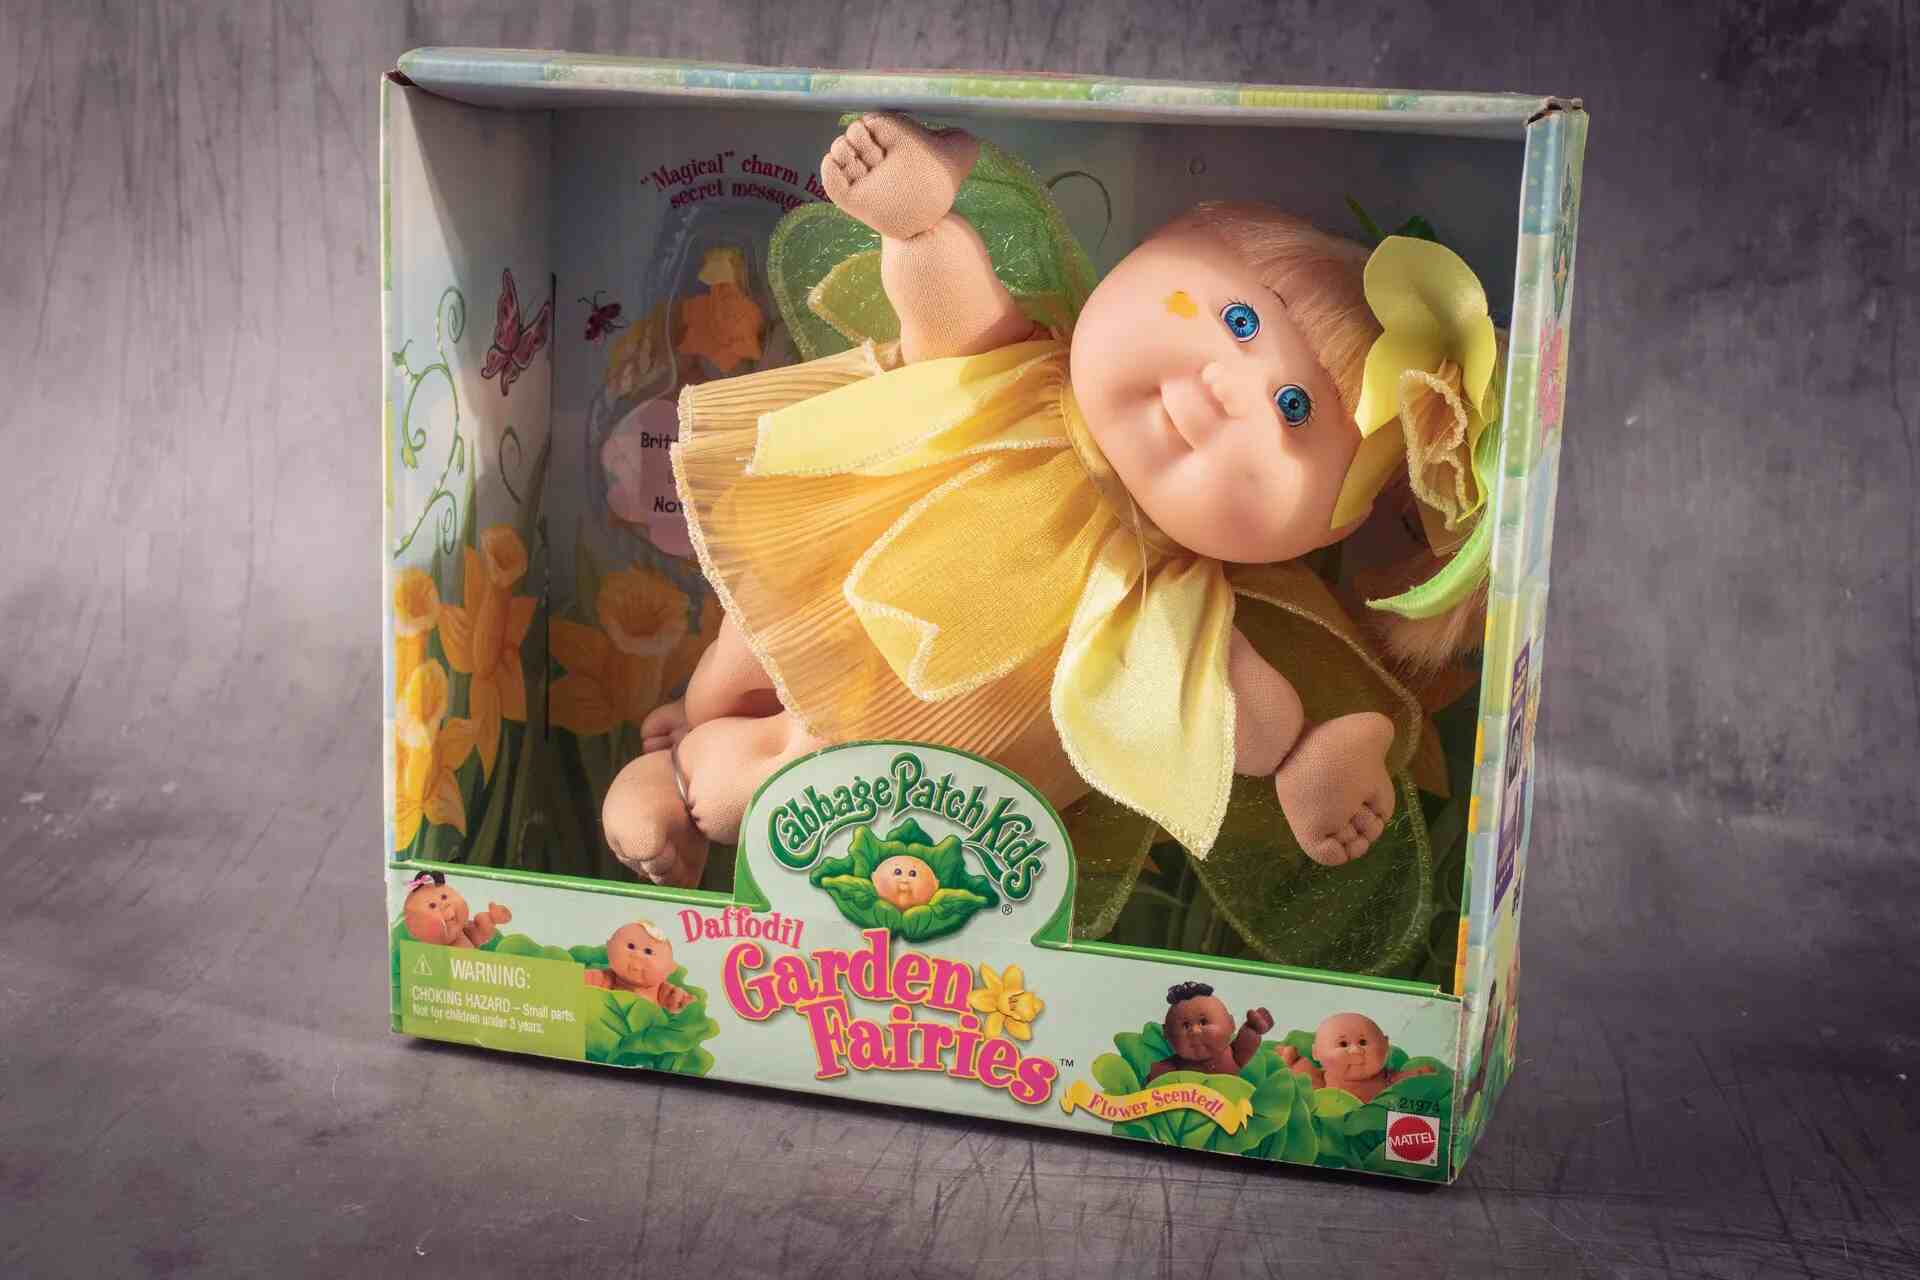 Original Cabbage Patch Kids Toy